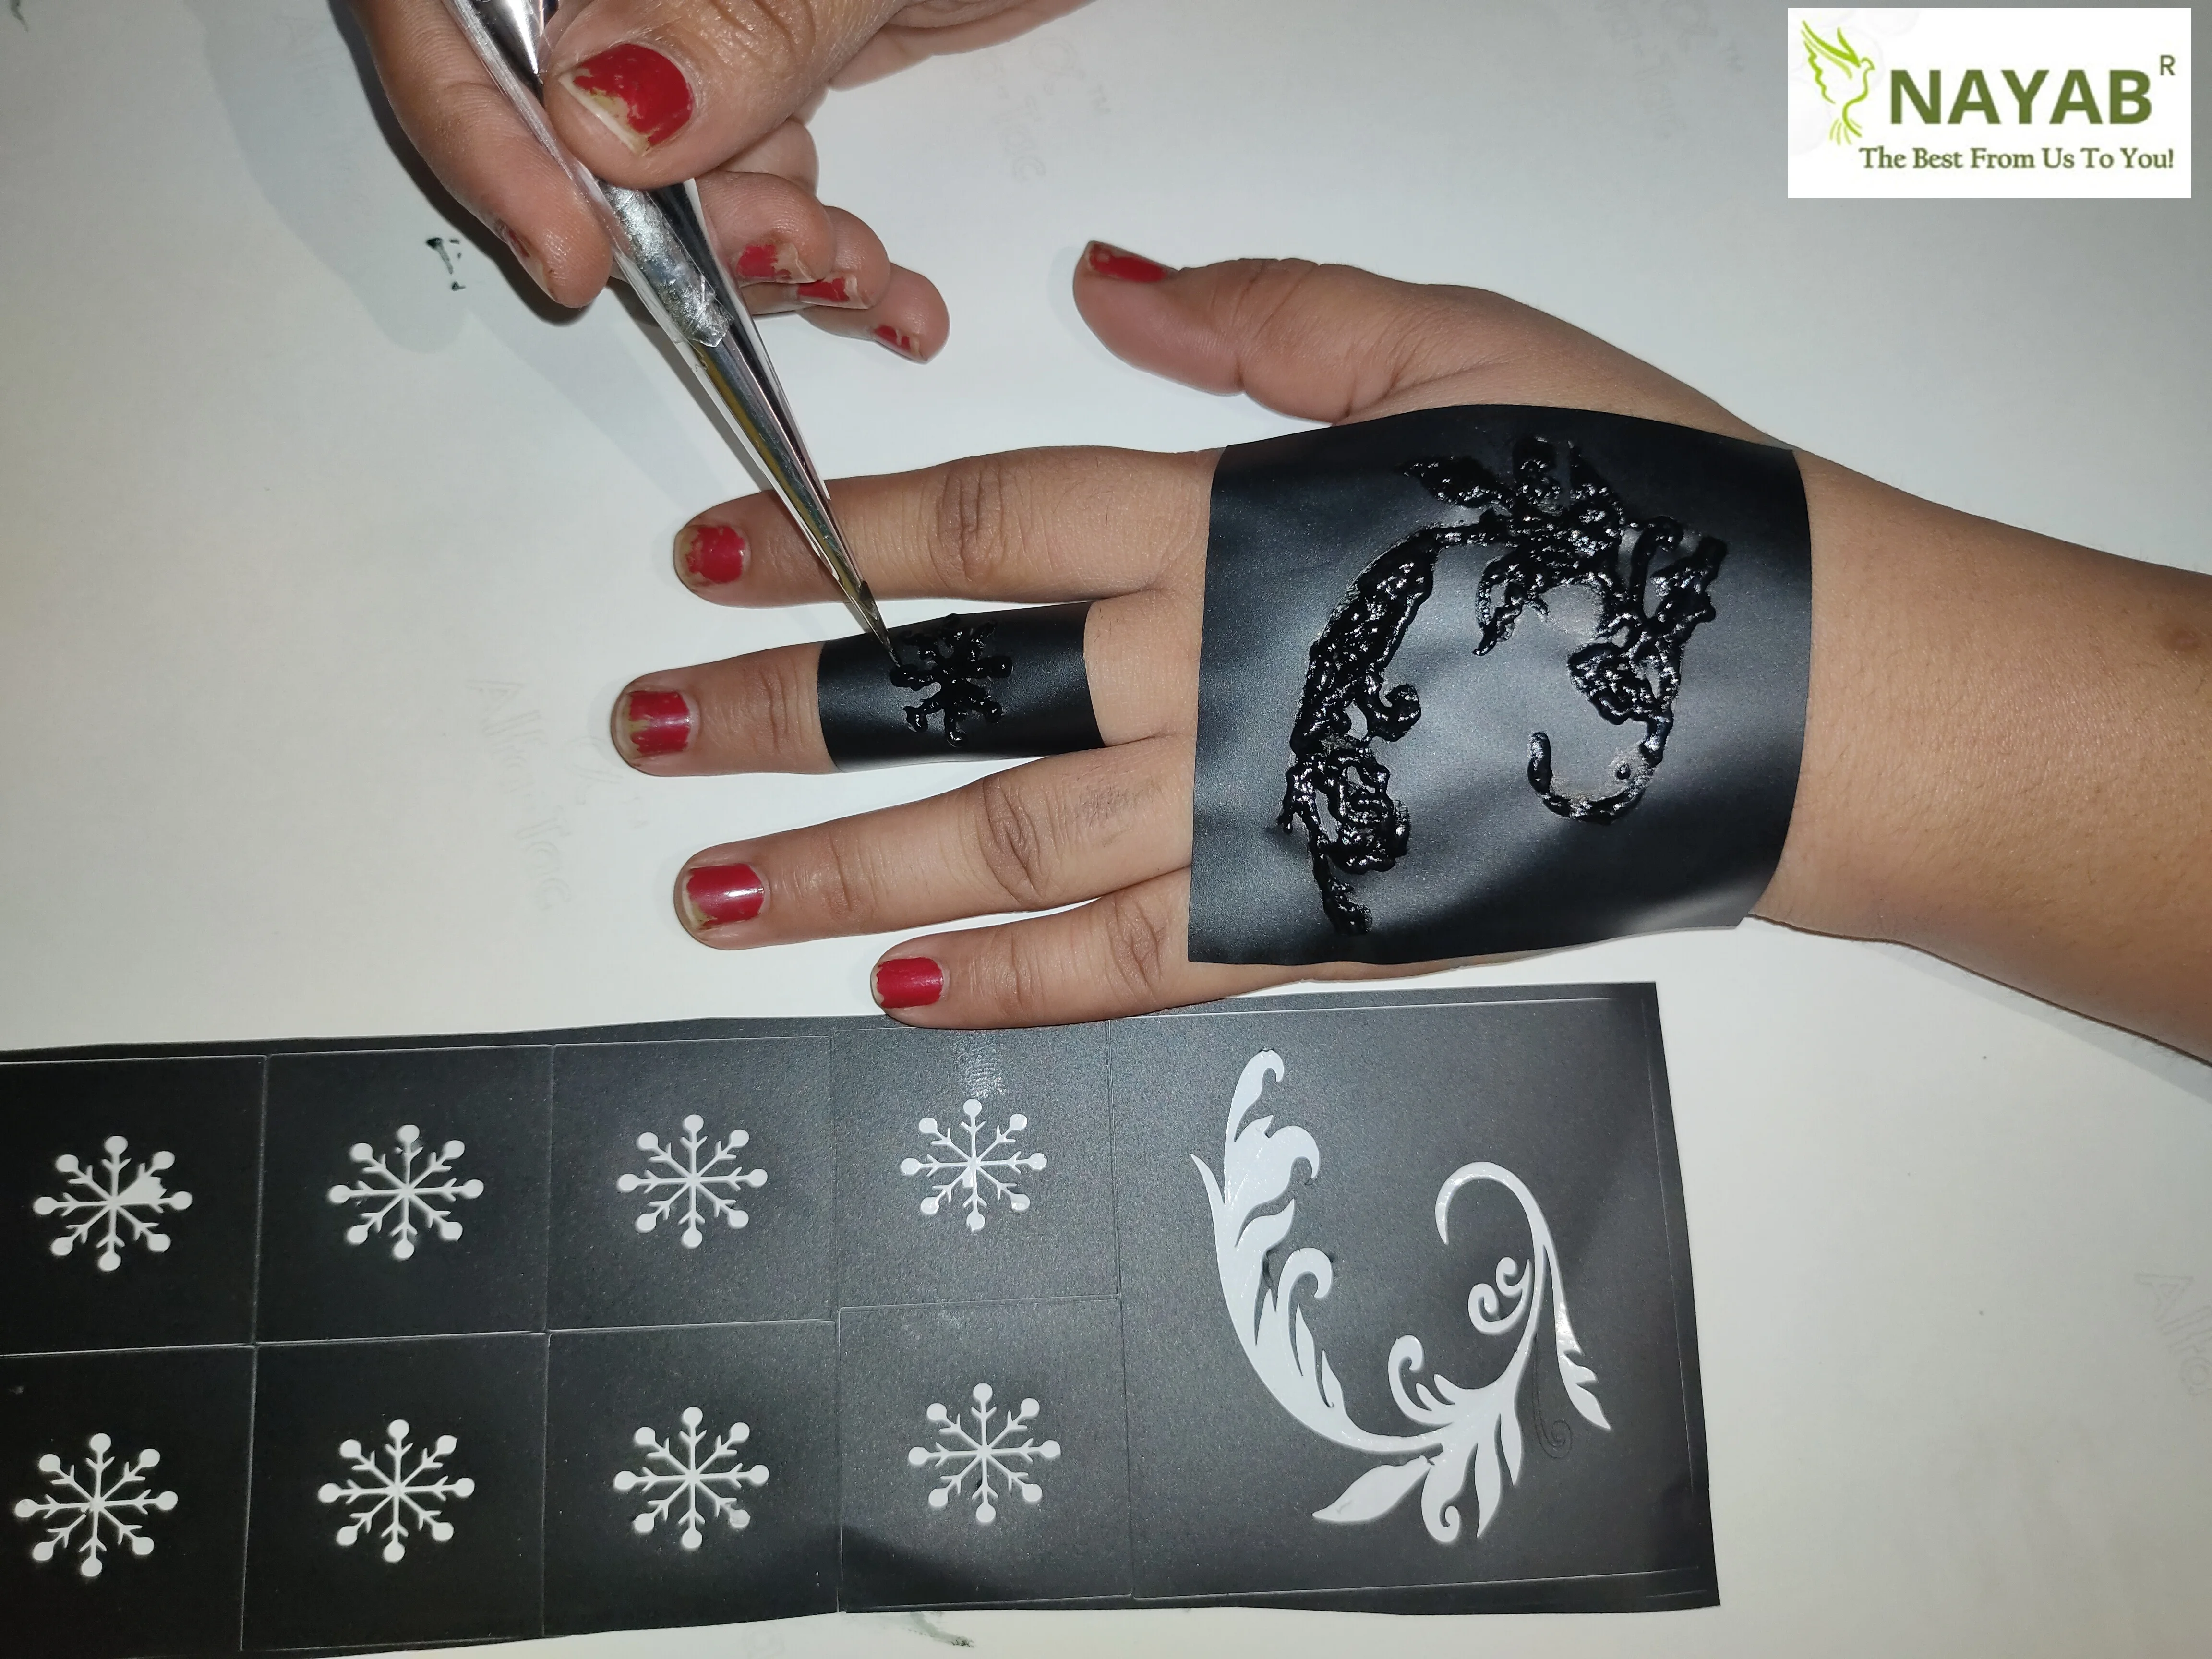 Top 15 Thumb Mehndi Designs | Easy simple Finger mehndi Tattoo designs |  Unique thumb henna Tattoos - YouTube